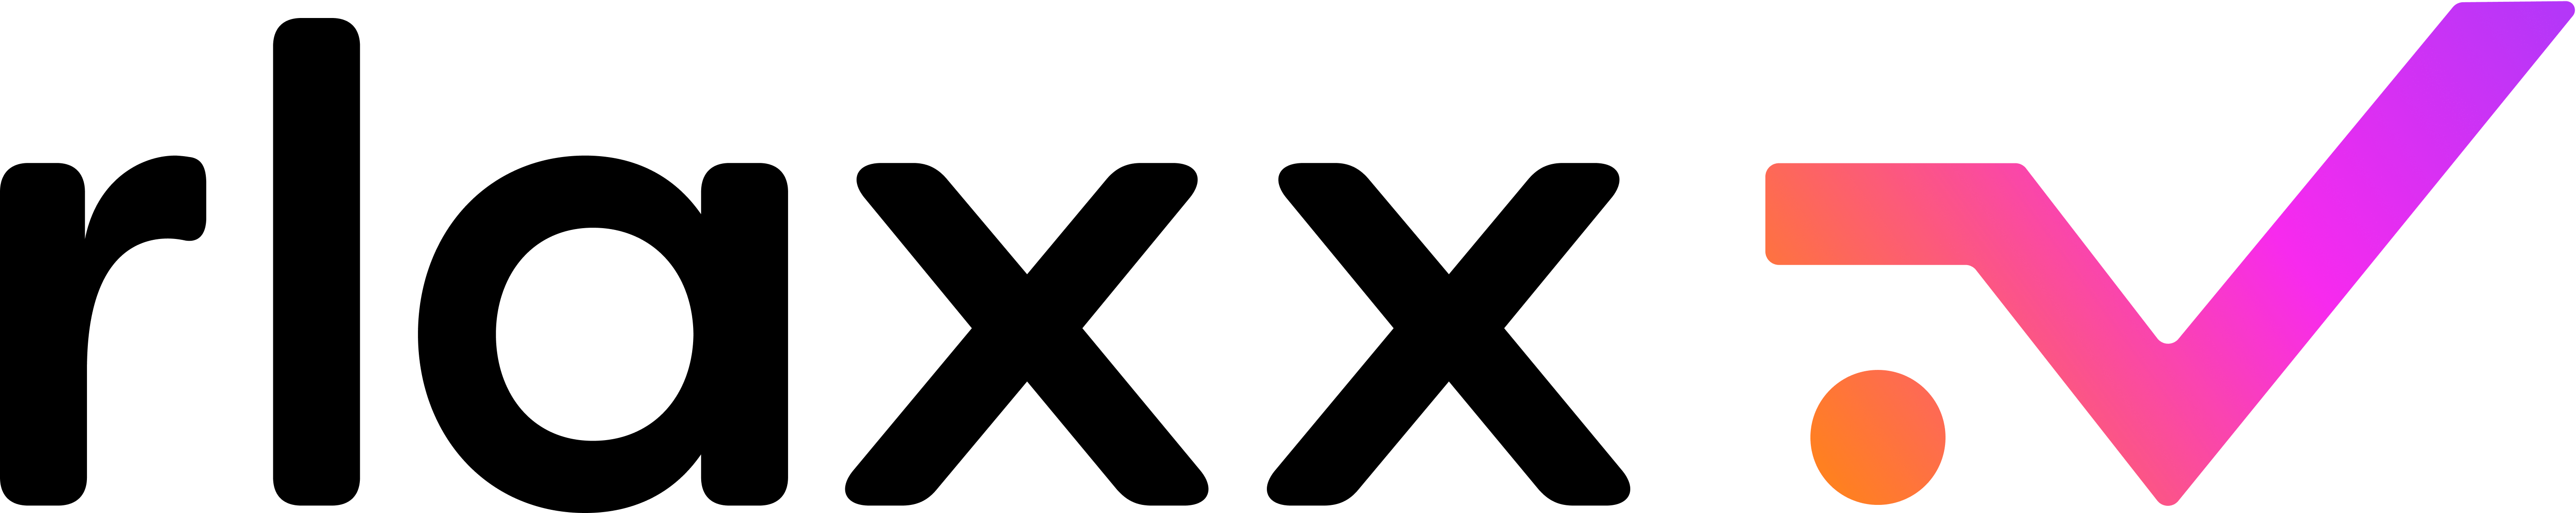 RLAXX TV Logo